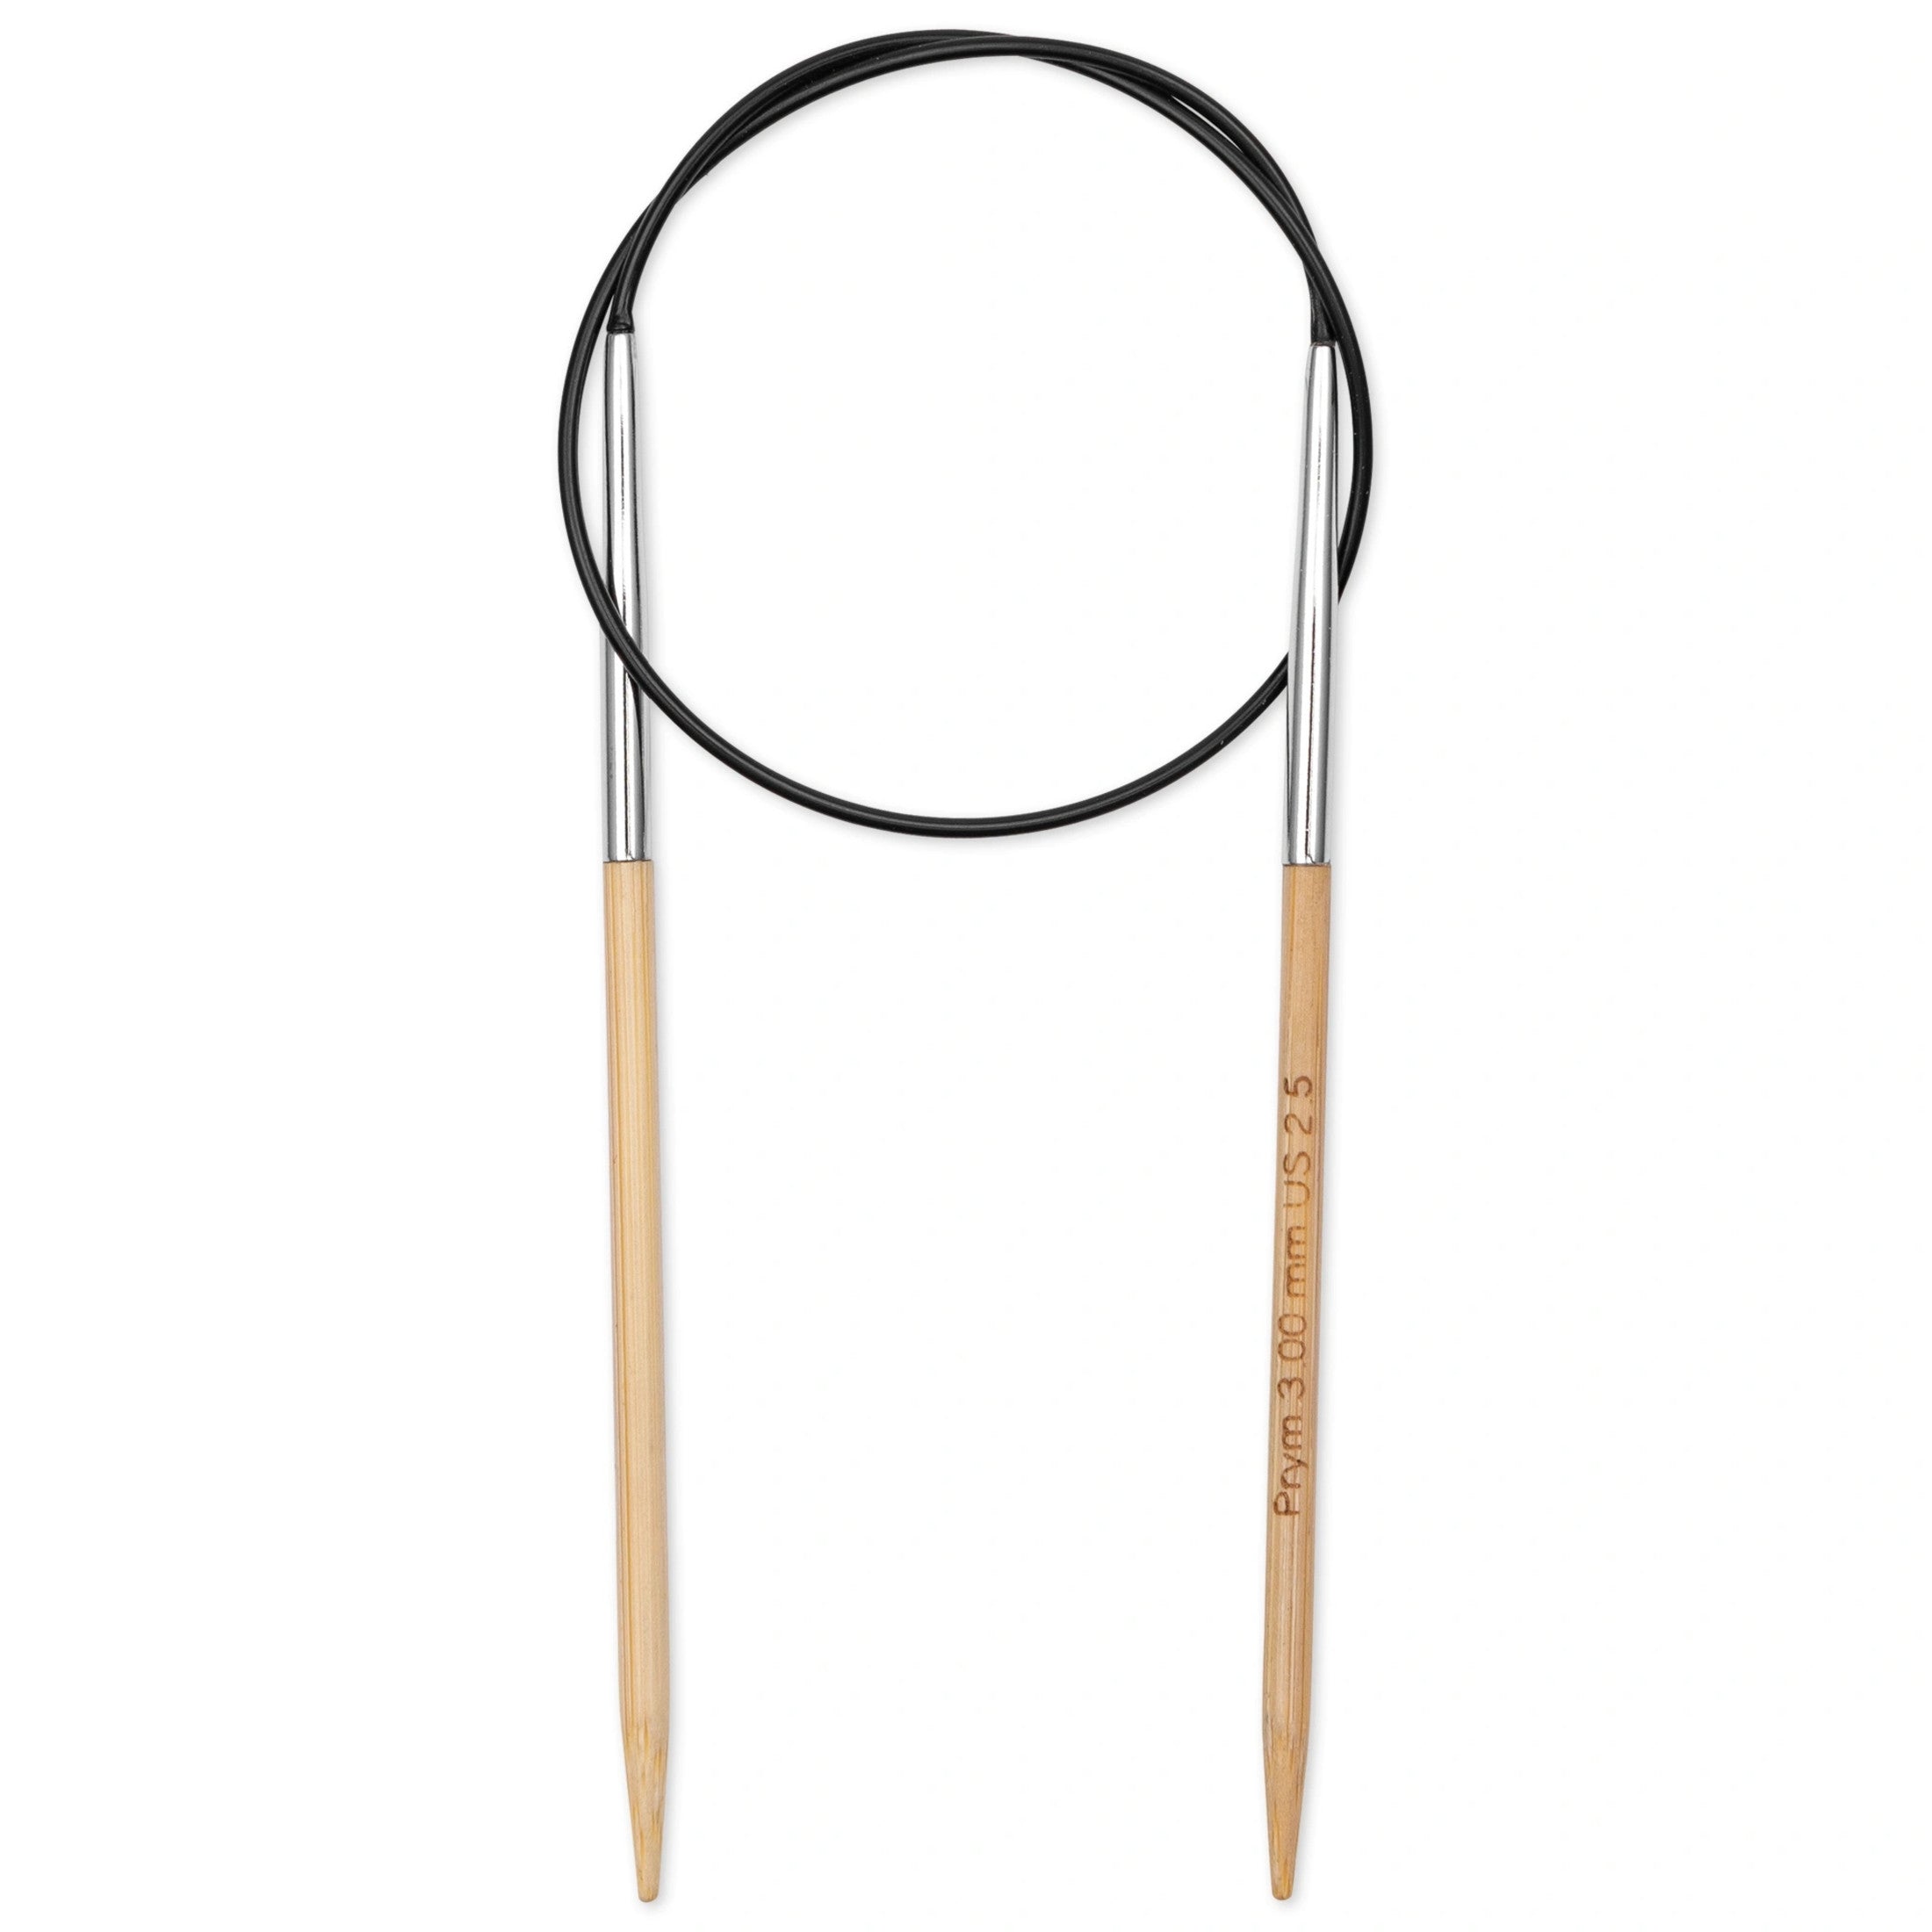 Prym 16 inch Circular Bamboo Knitting Needles, 10mm